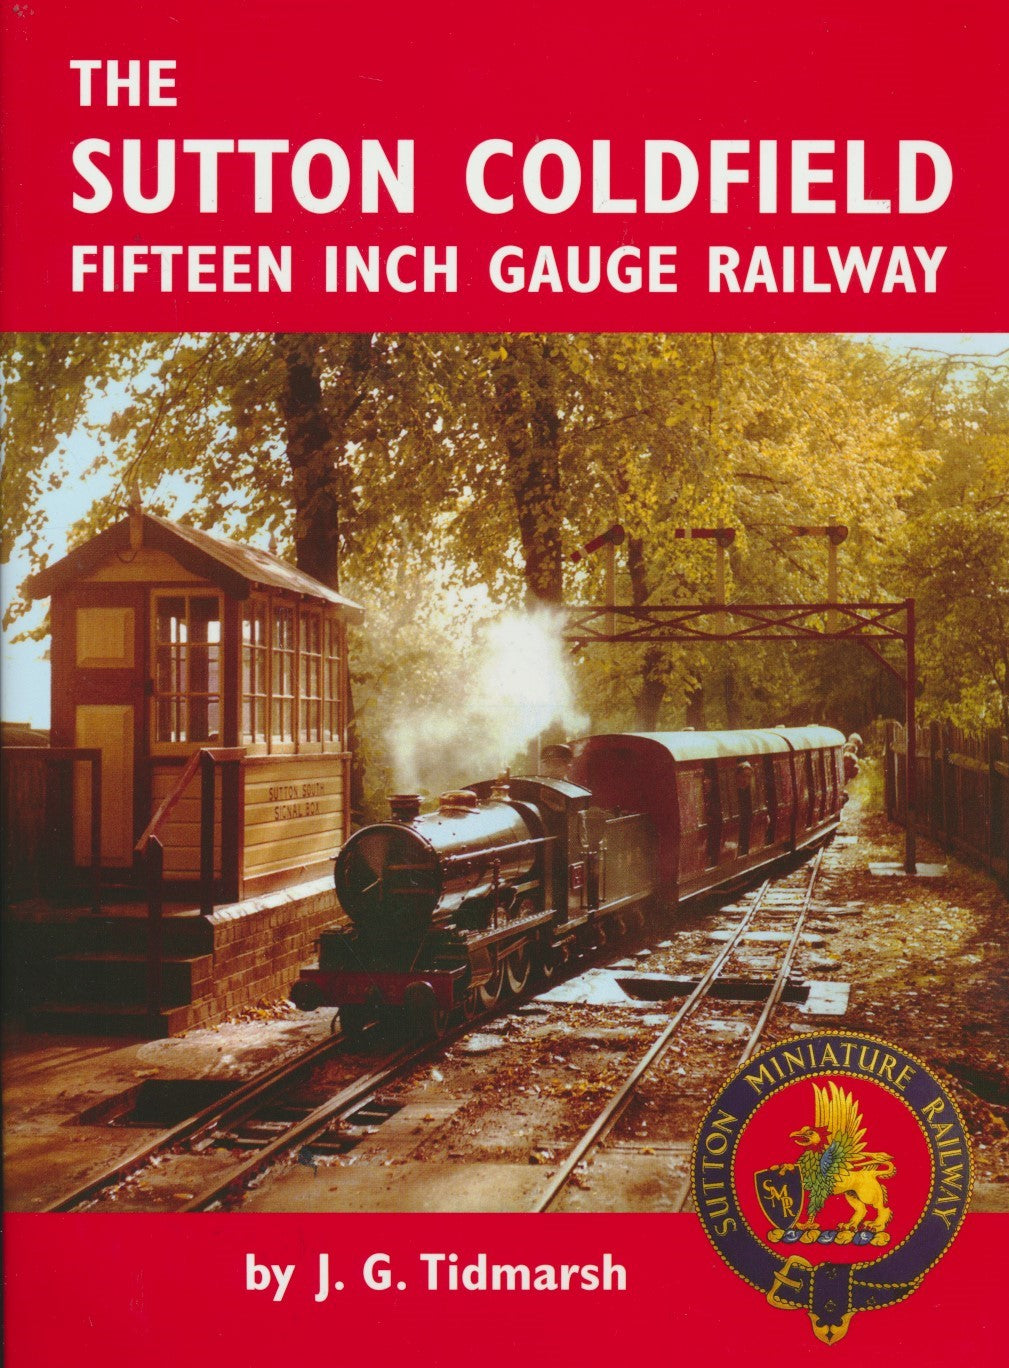 The Sutton Coldfield Fifteen Inch Gauge Railway